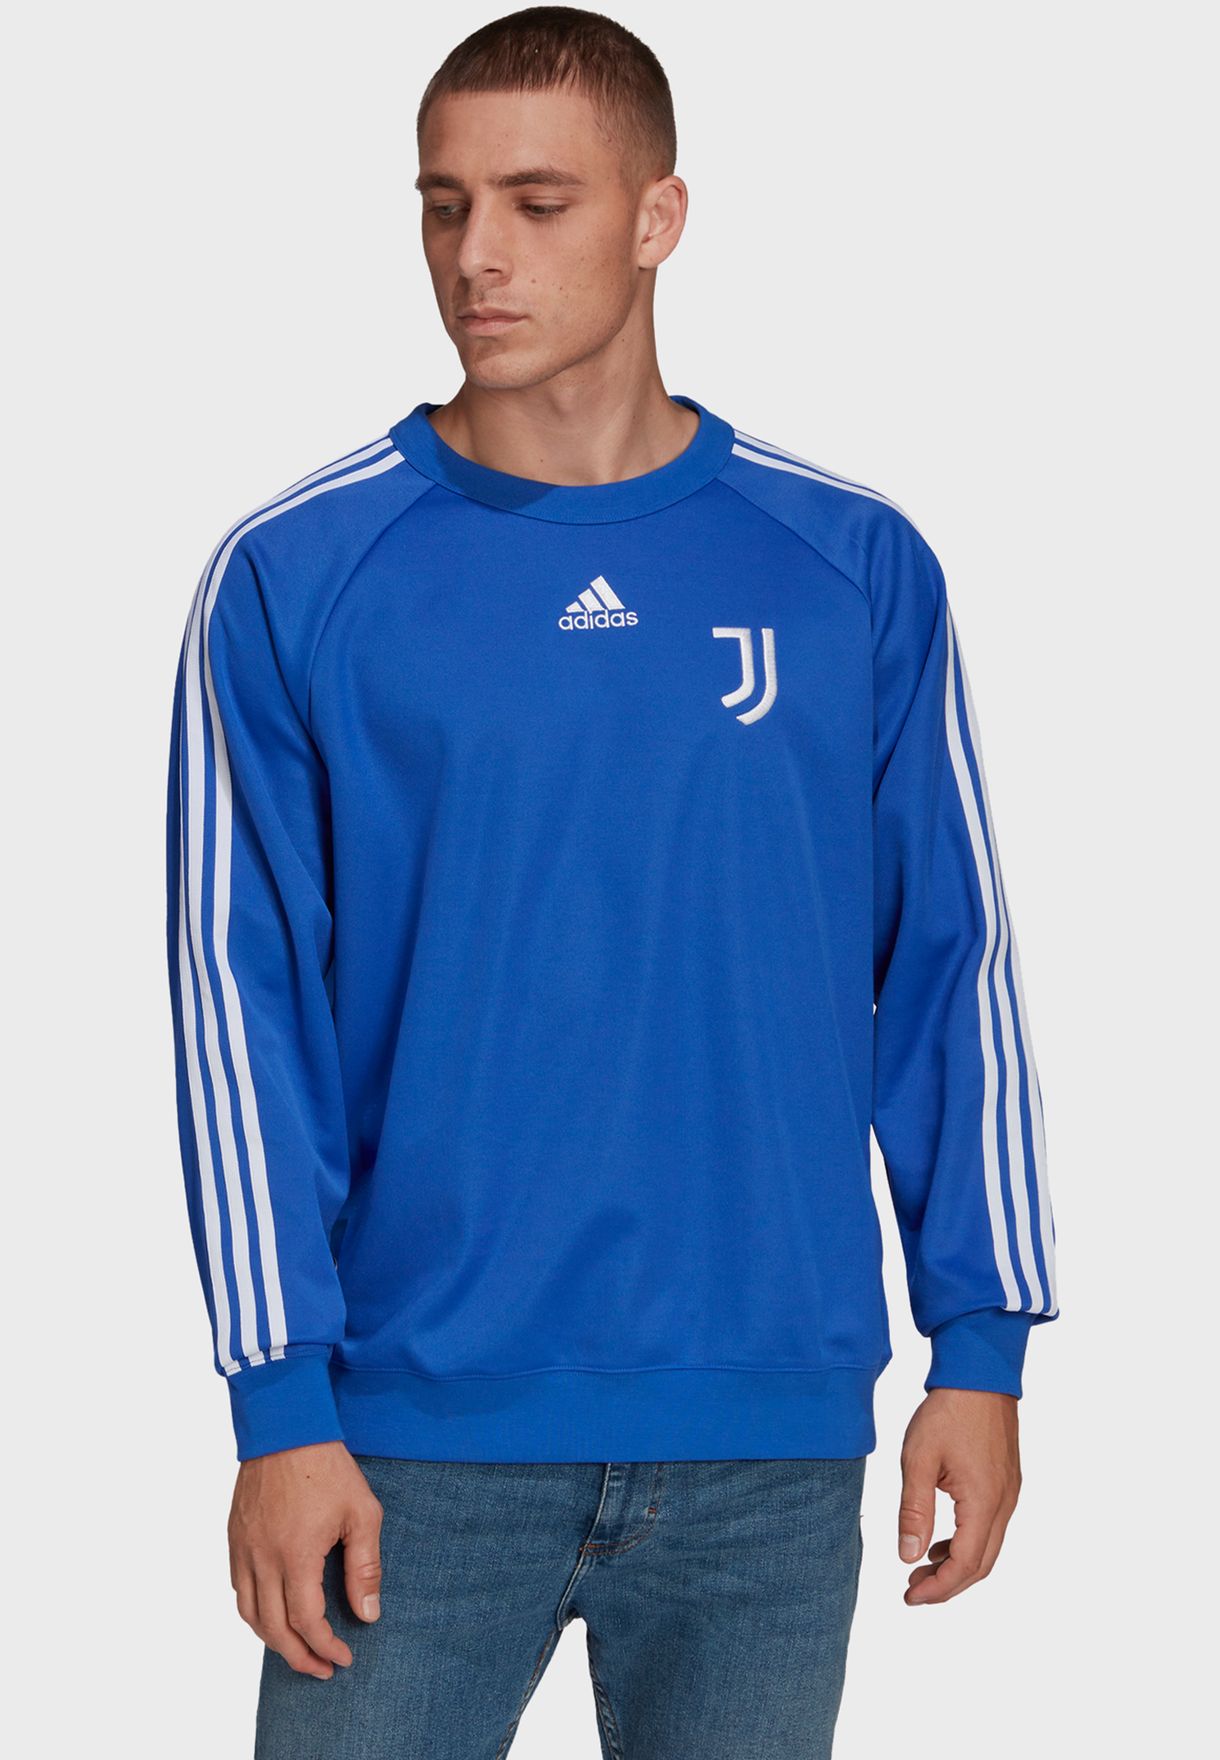 Juventus Teamgeist Sweatshirt